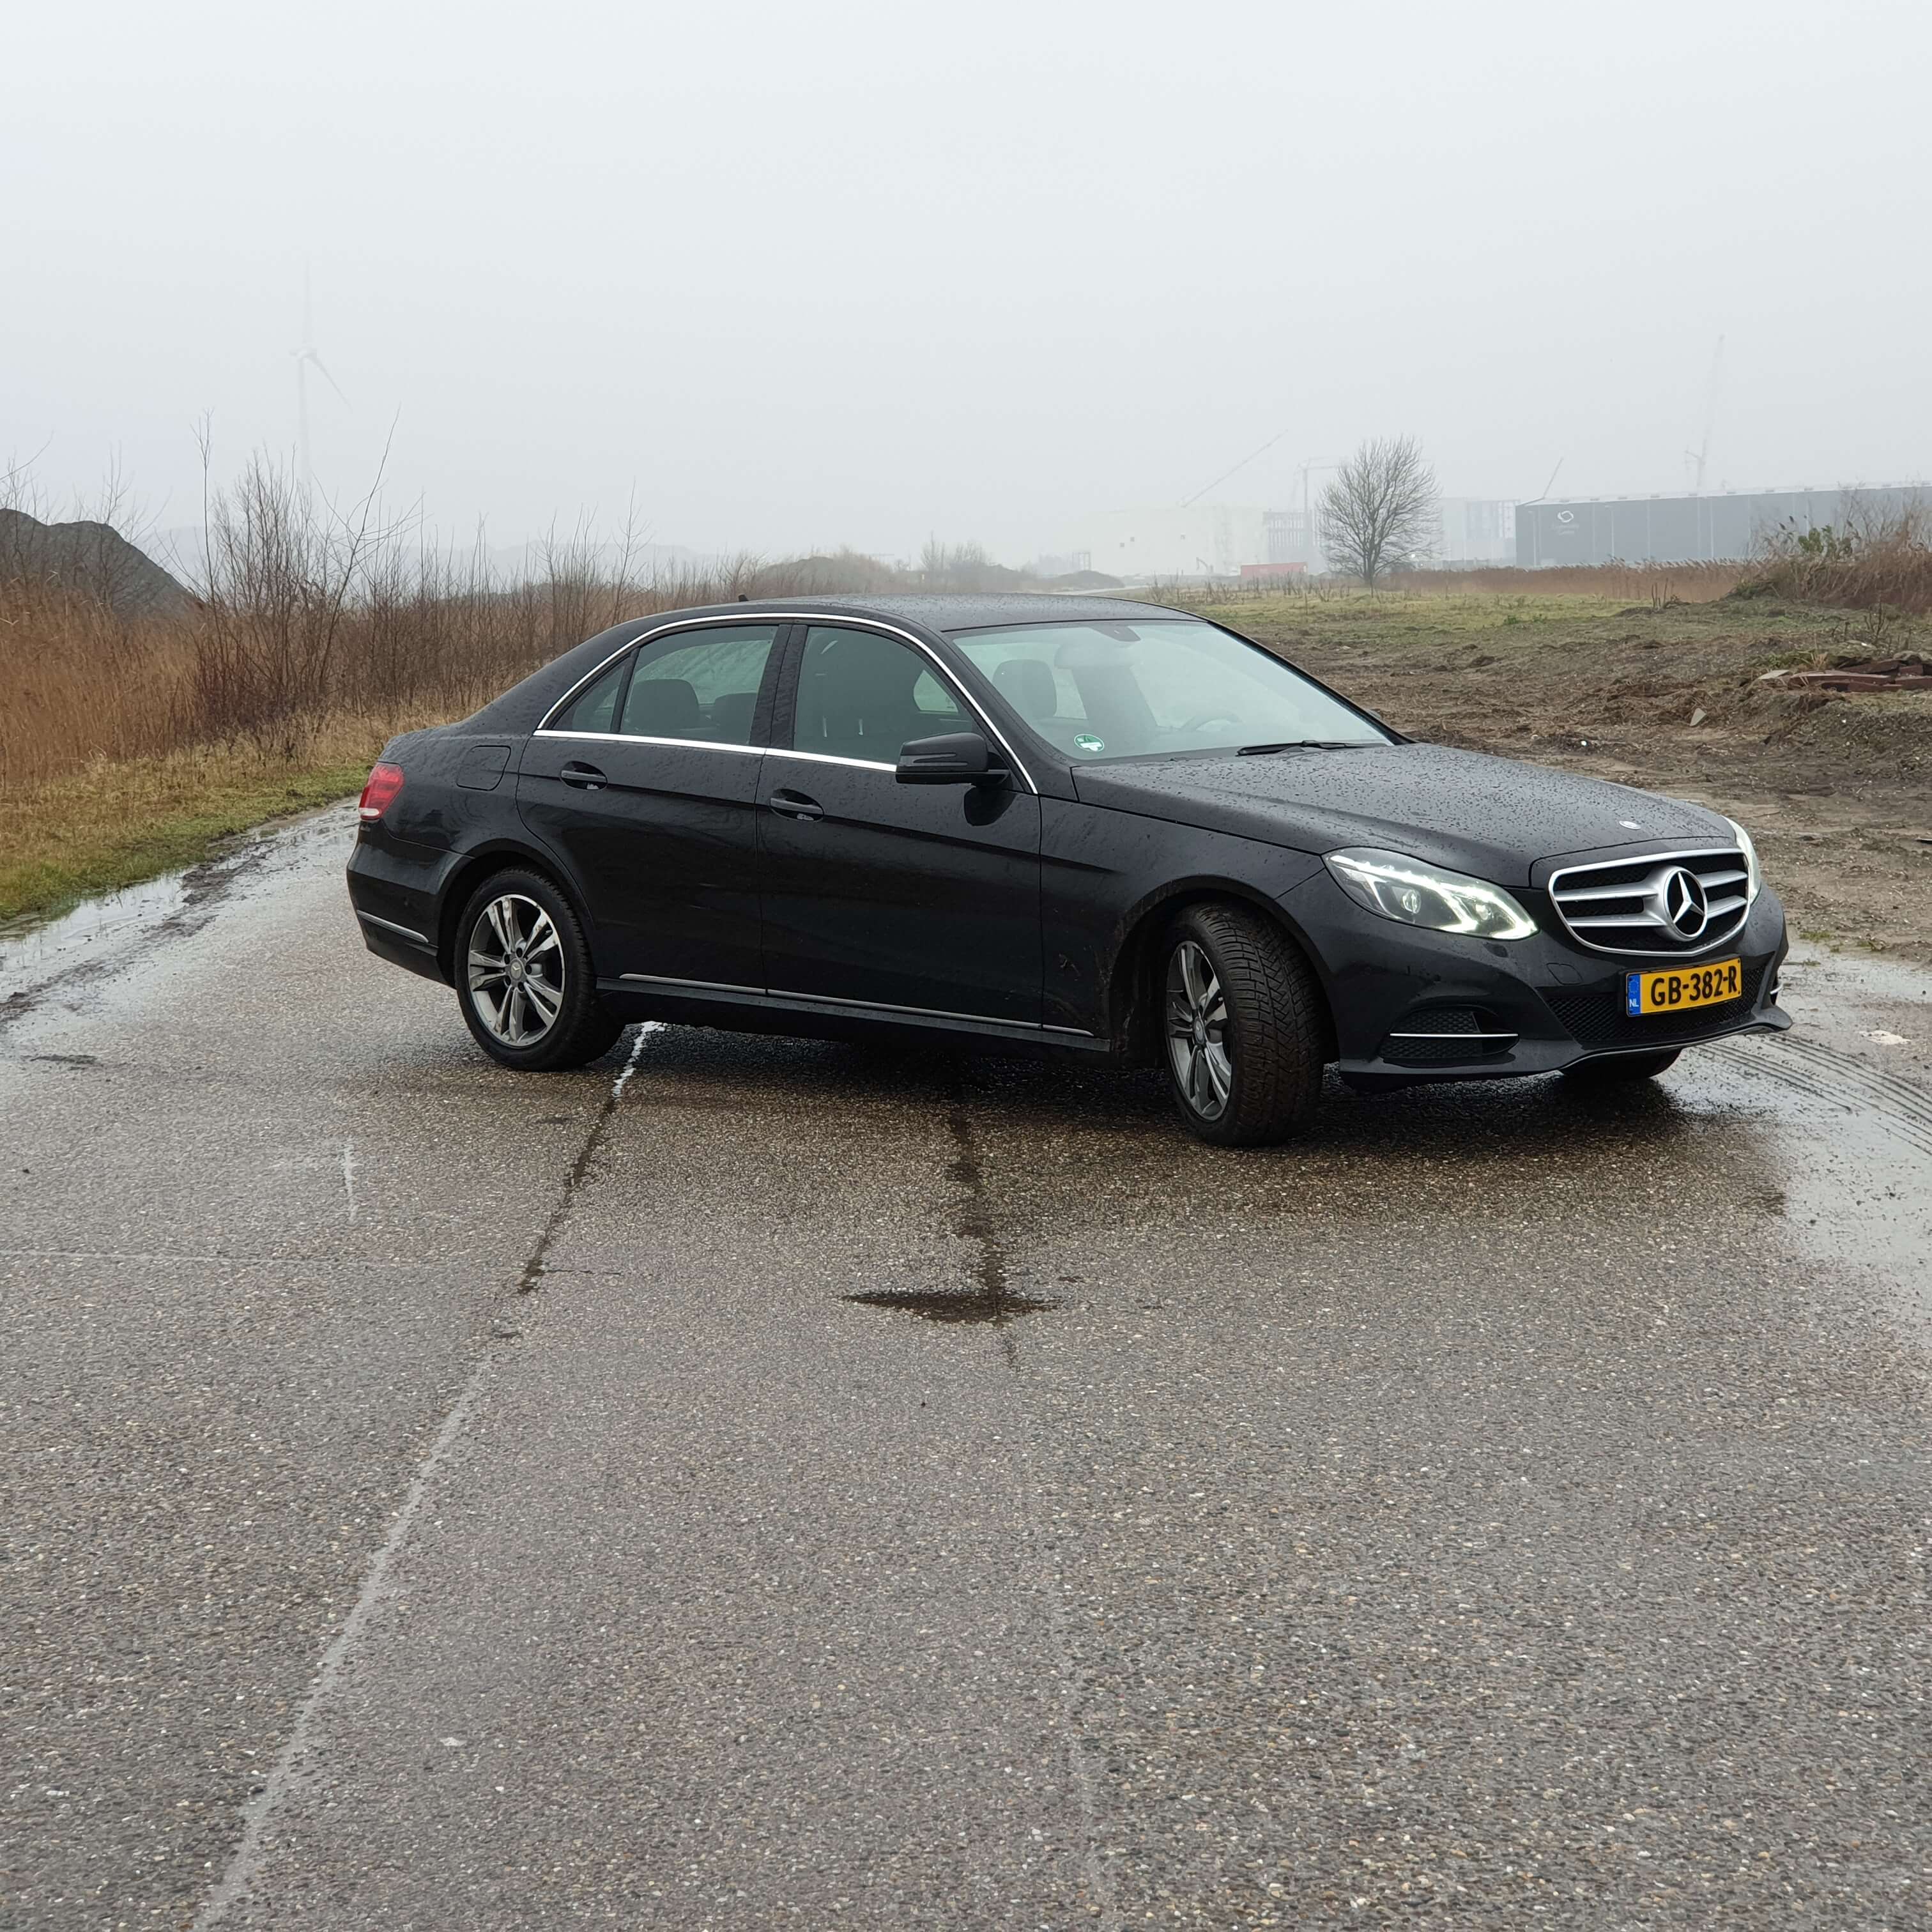 Huur een 3 seater Car with driver (Mercedes Benz E Klasse 2021) van Direct Vip Service in Amsterdam 